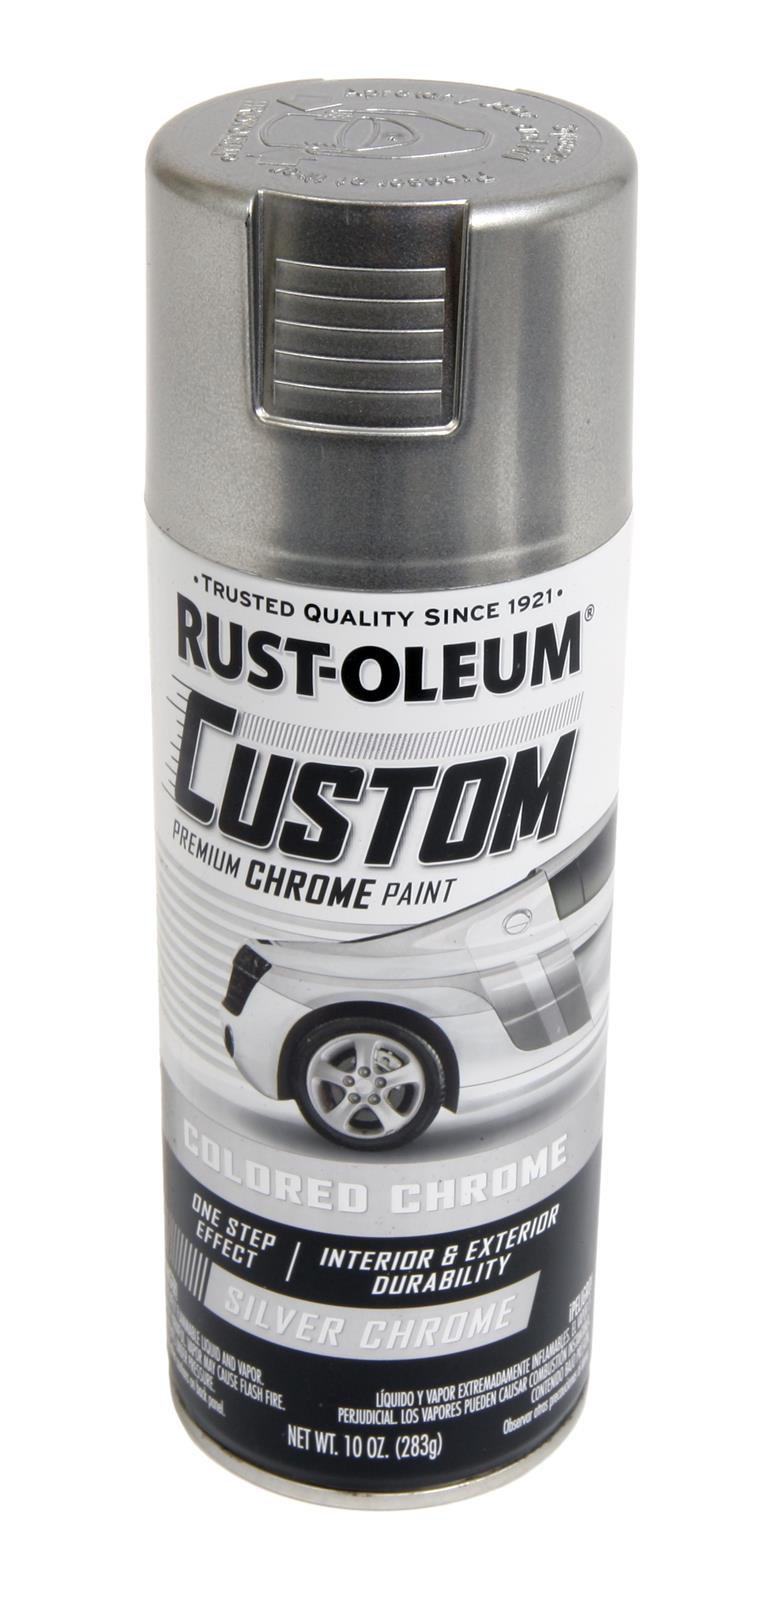 How to Use Rust-Oleum Custom Chrome Automotive Paint 